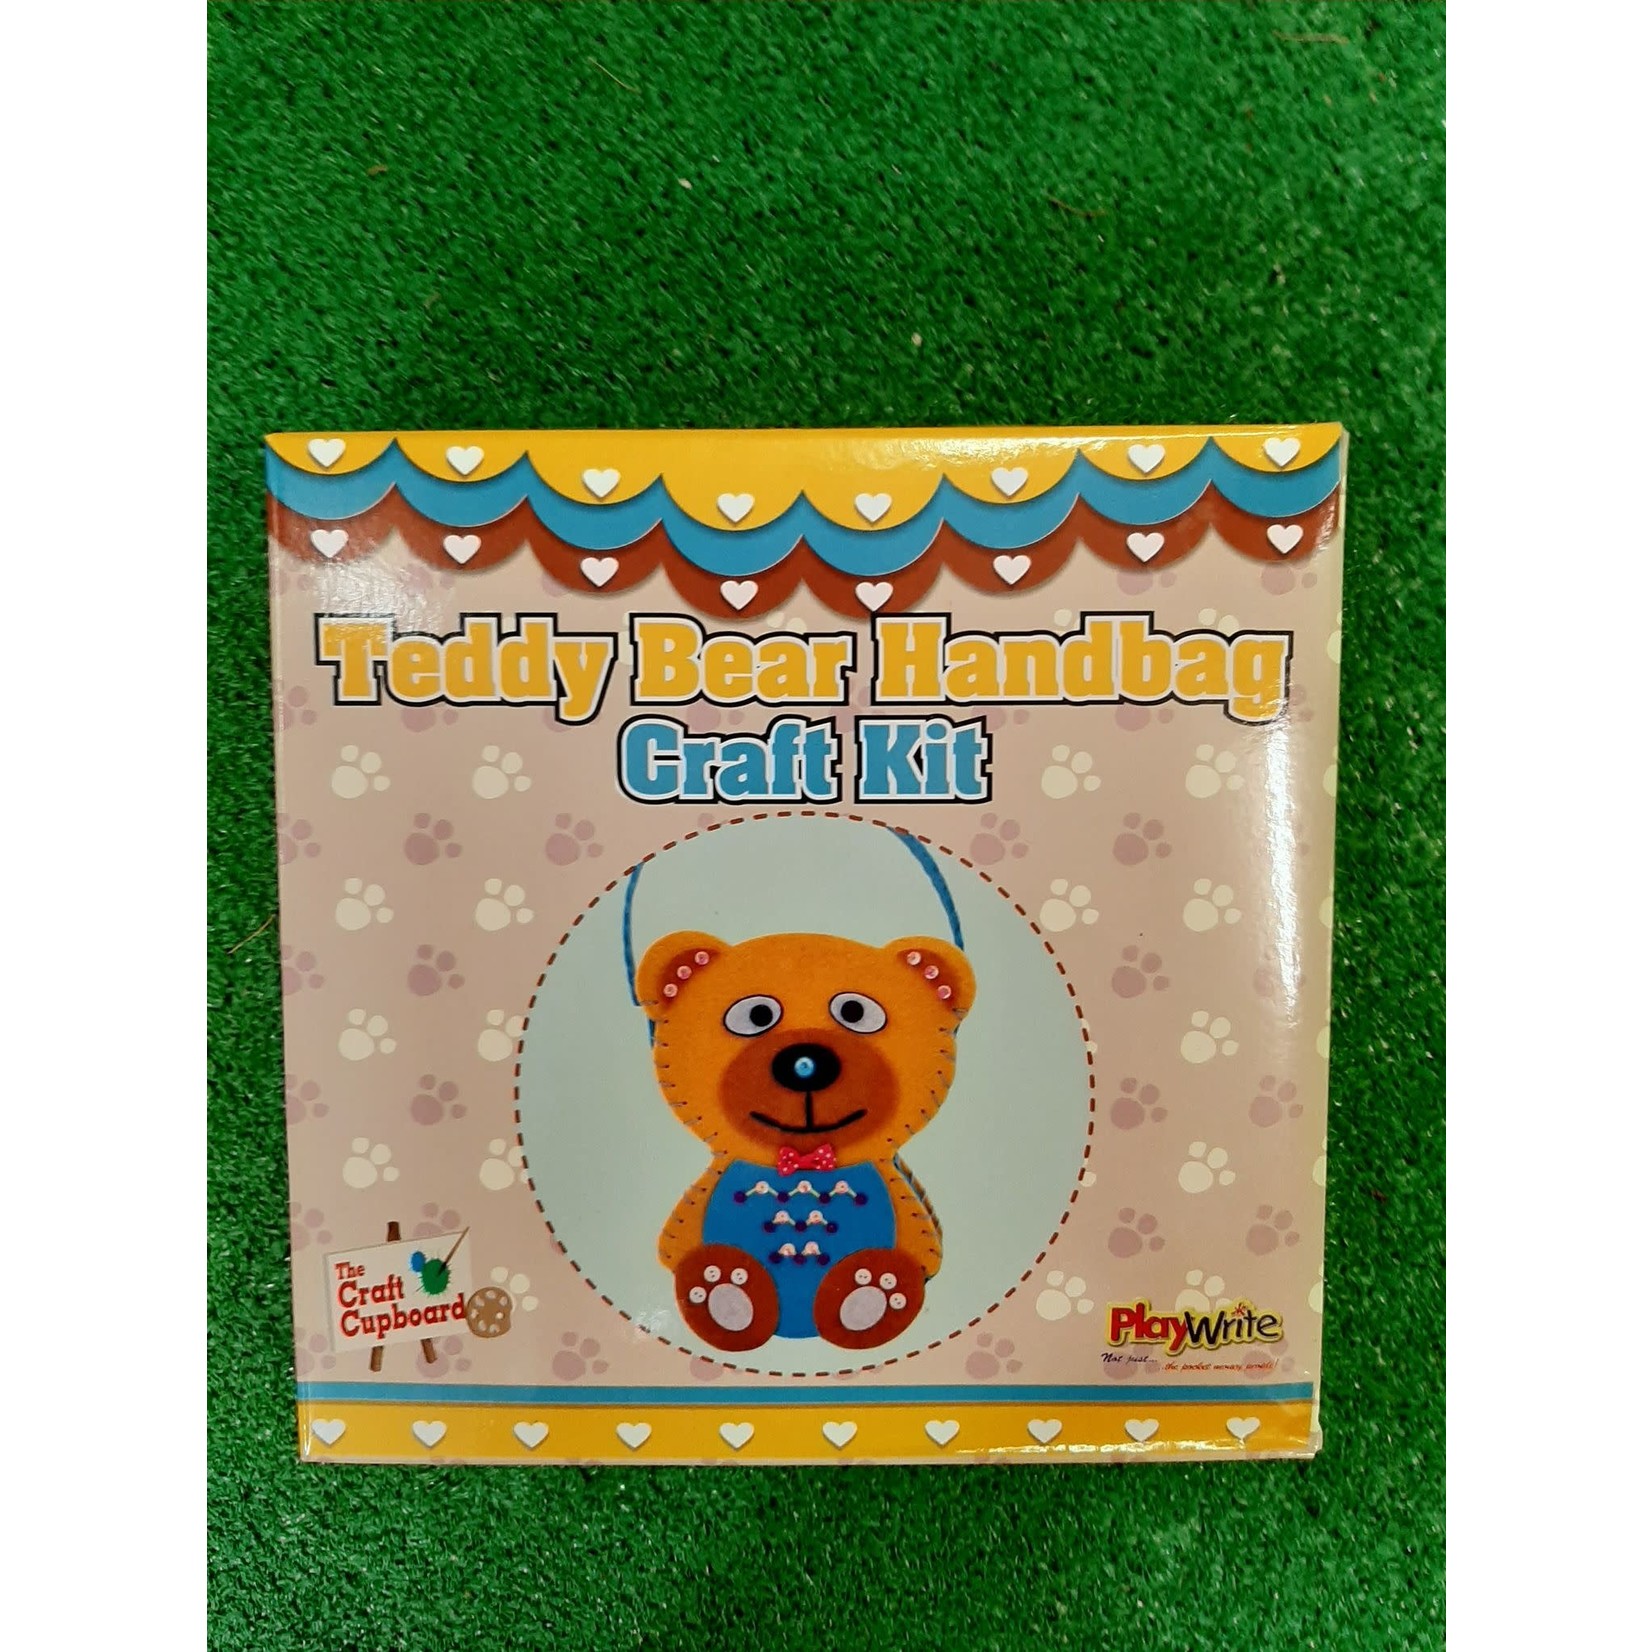 Playwrite Teddy Bear Handbag Craft Kit